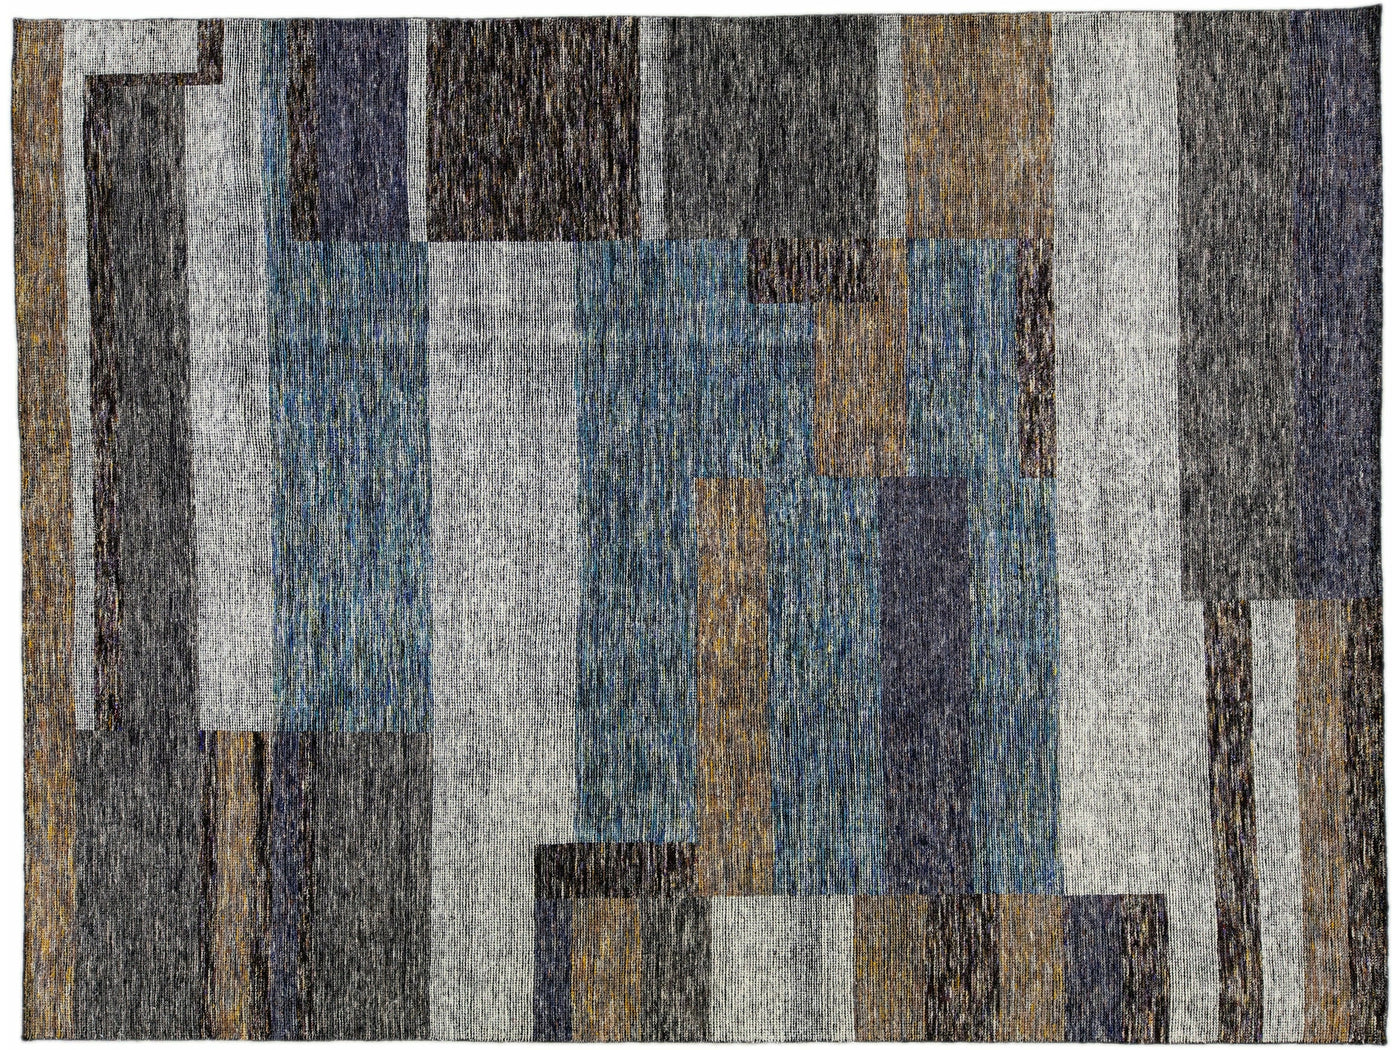 Modern Apadana's Safi Collection Handmade Abstract Earthy Tone Designed Wool Rug